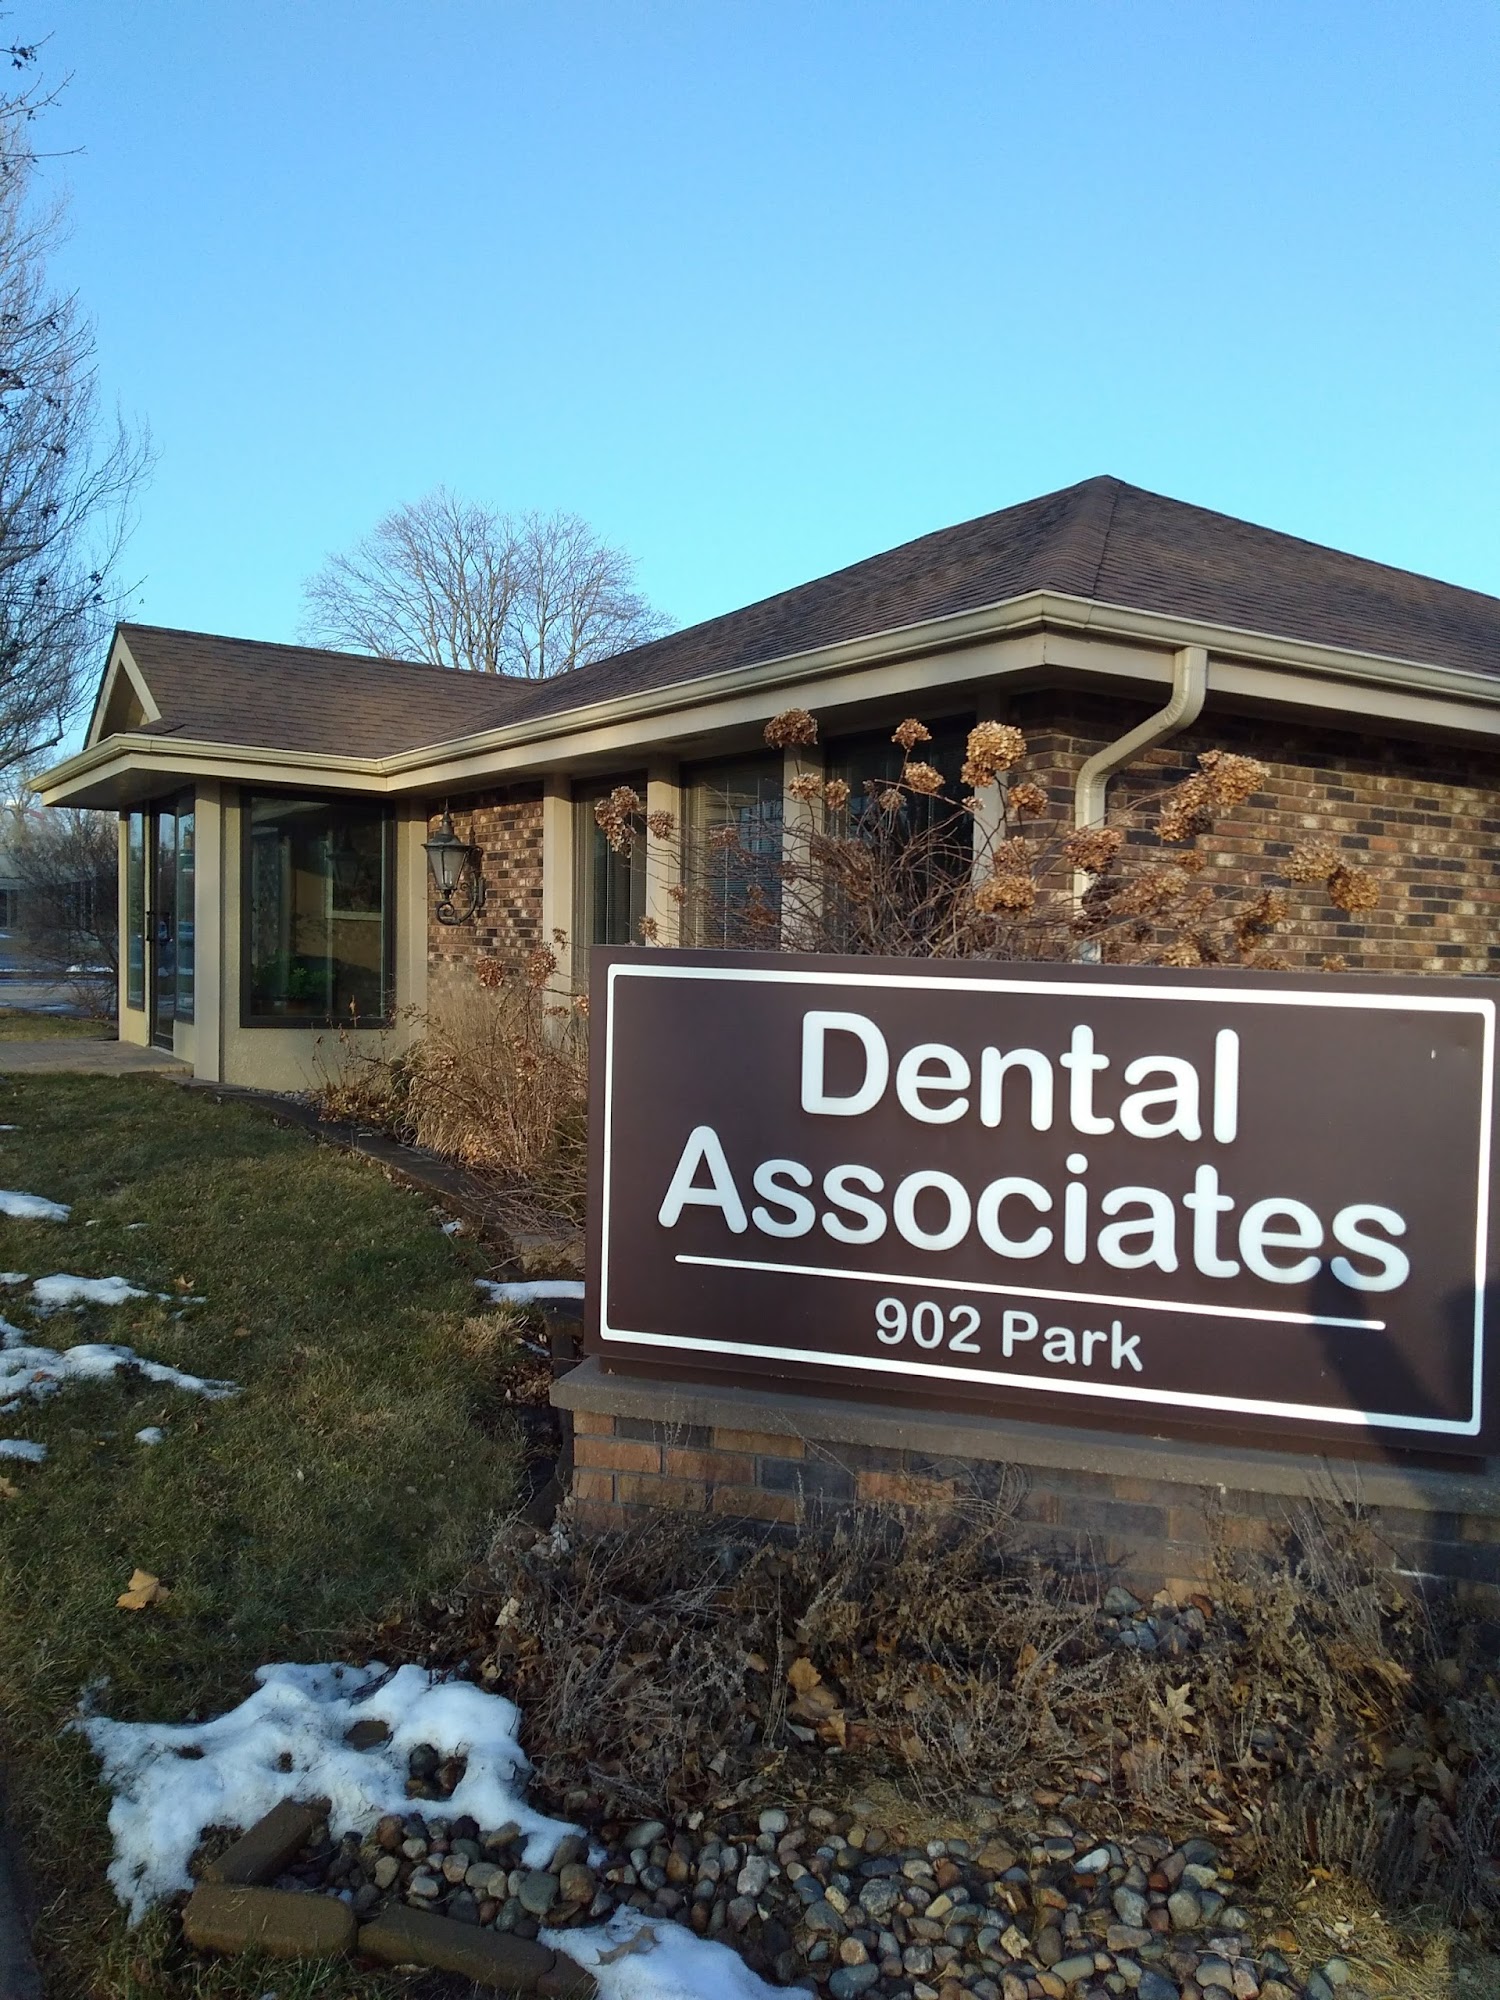 Dental Associates 902 Park St, Grinnell Iowa 50112